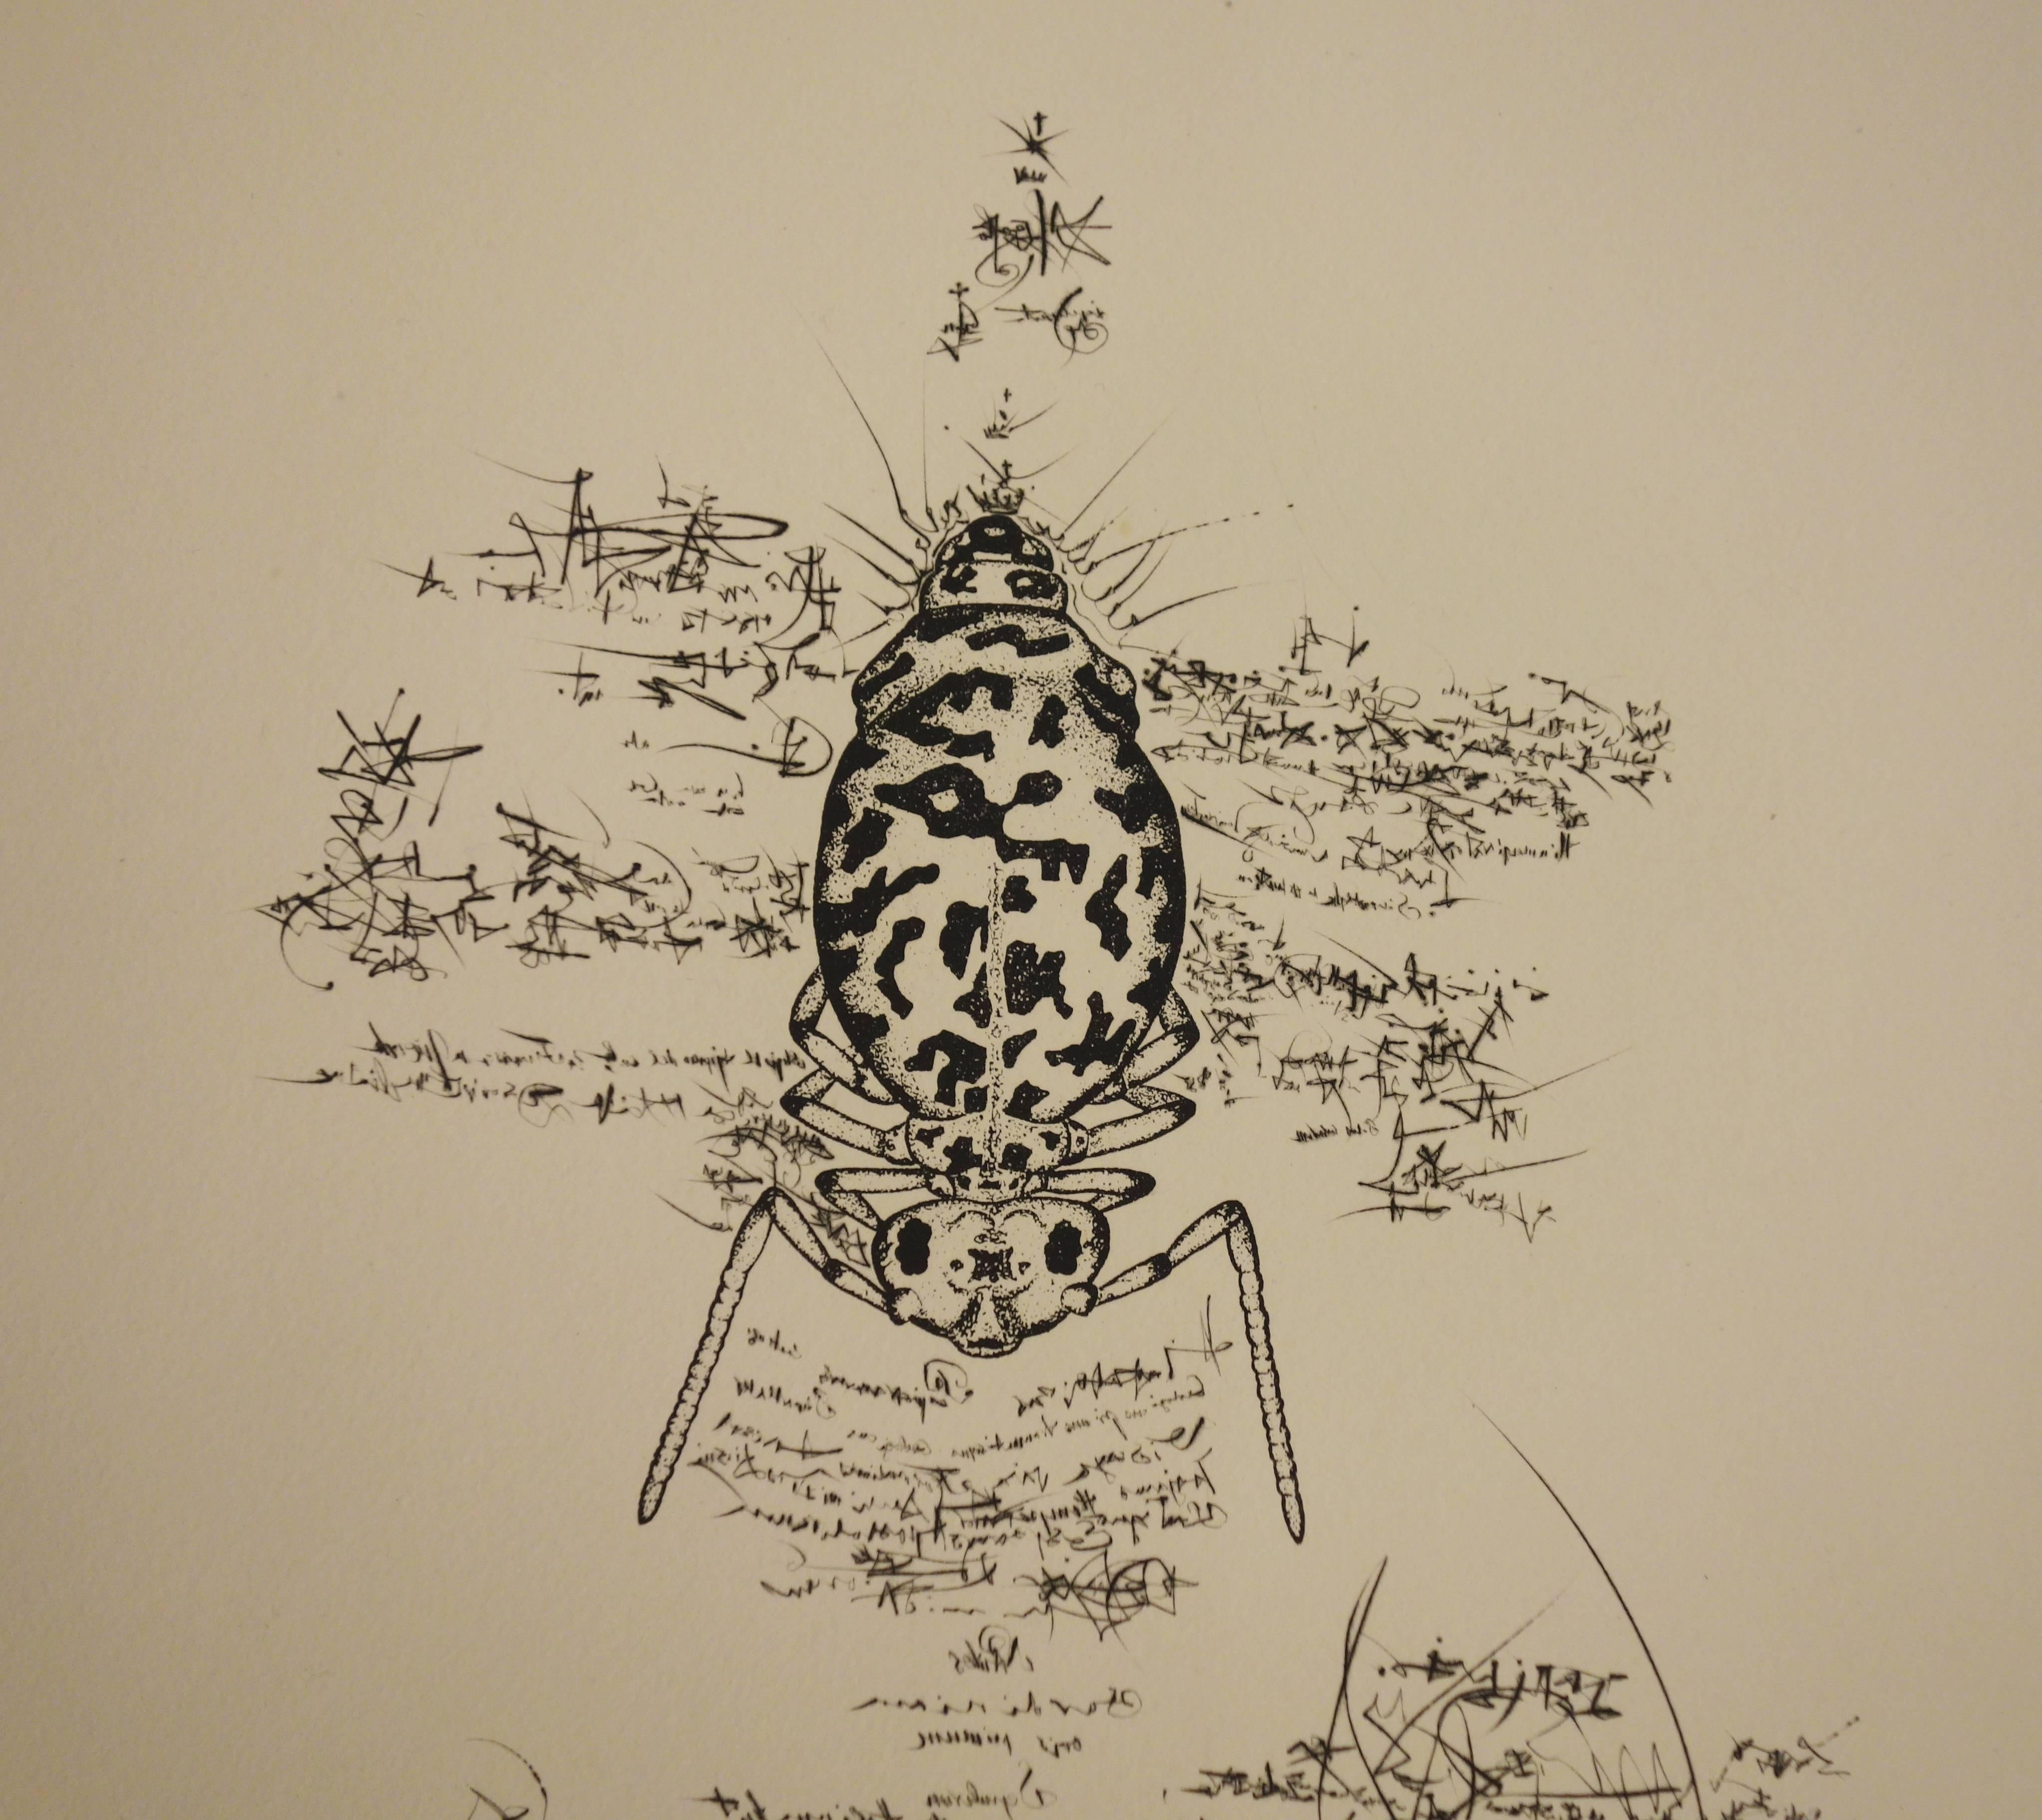 Salvador Dali (1904-1989) 
Immortalité du Dalianus Galea (1973) 

Original Etching on Auvergne vellum
Handsigned in pencil
Numbered /Z
Size : 22,8 x 15.3 inch (58 x 39 cm) 

References : Catalog raisonné Field 73-20F / Michler and Lopsinger